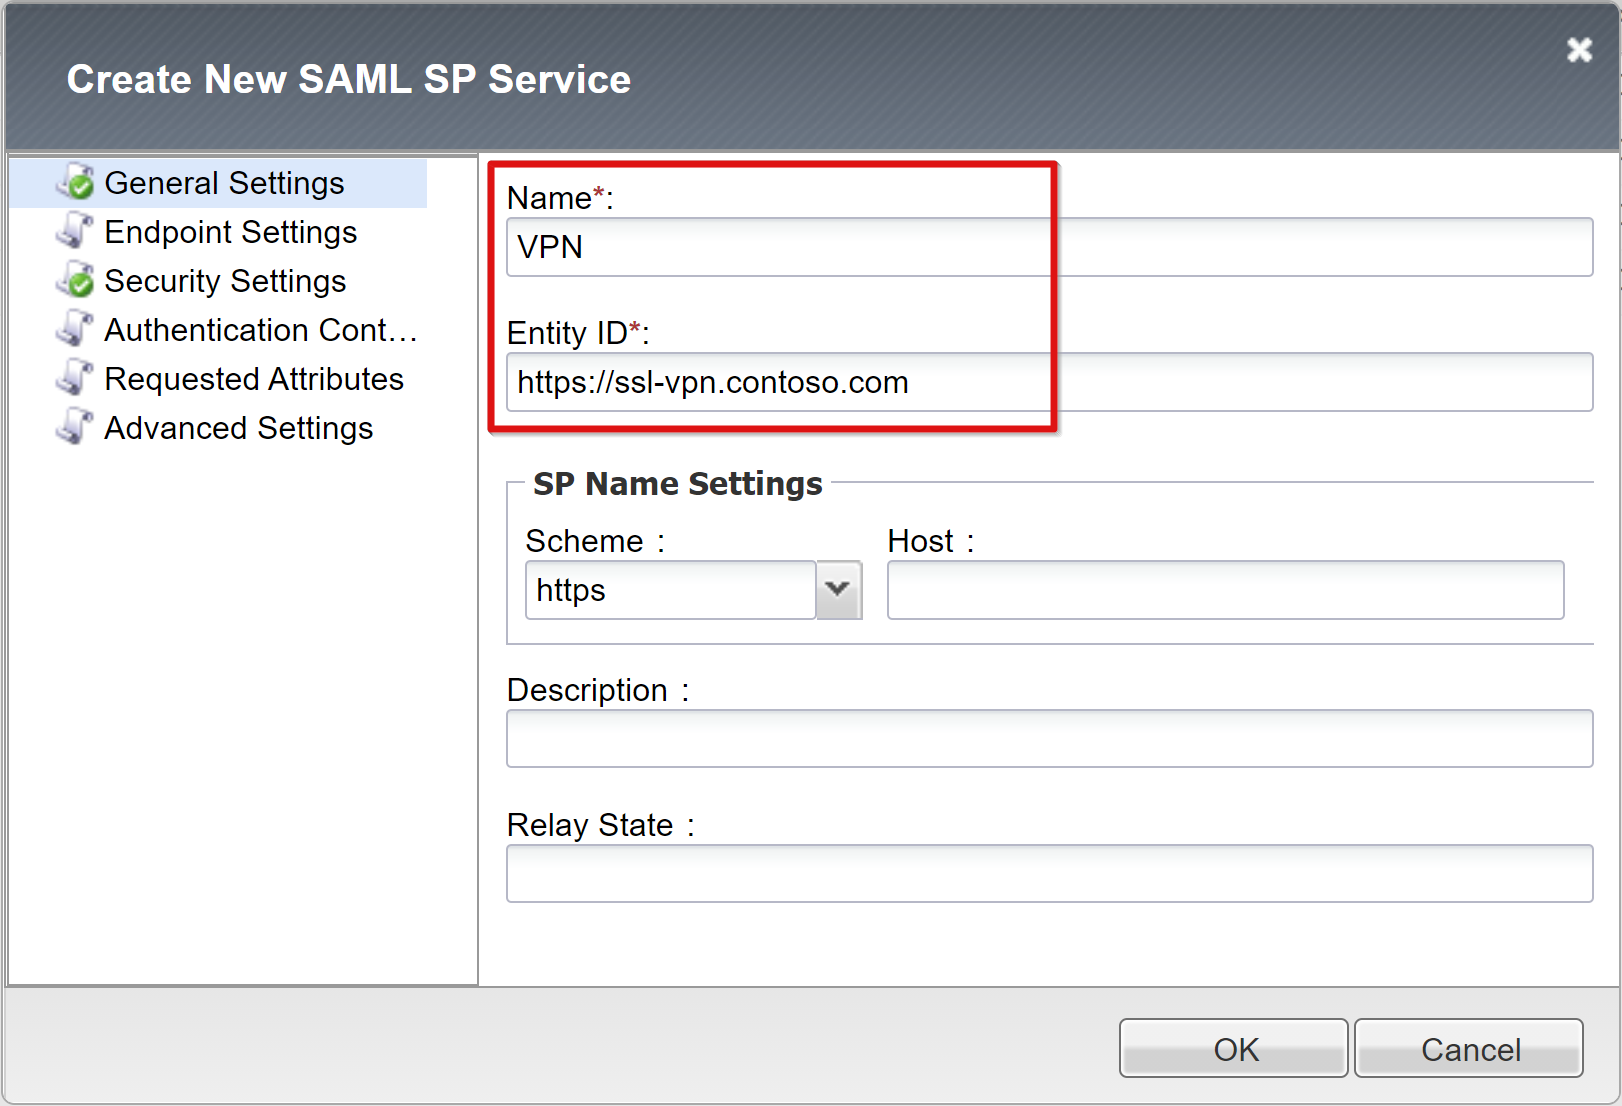 Image shows creating new SAML SP service